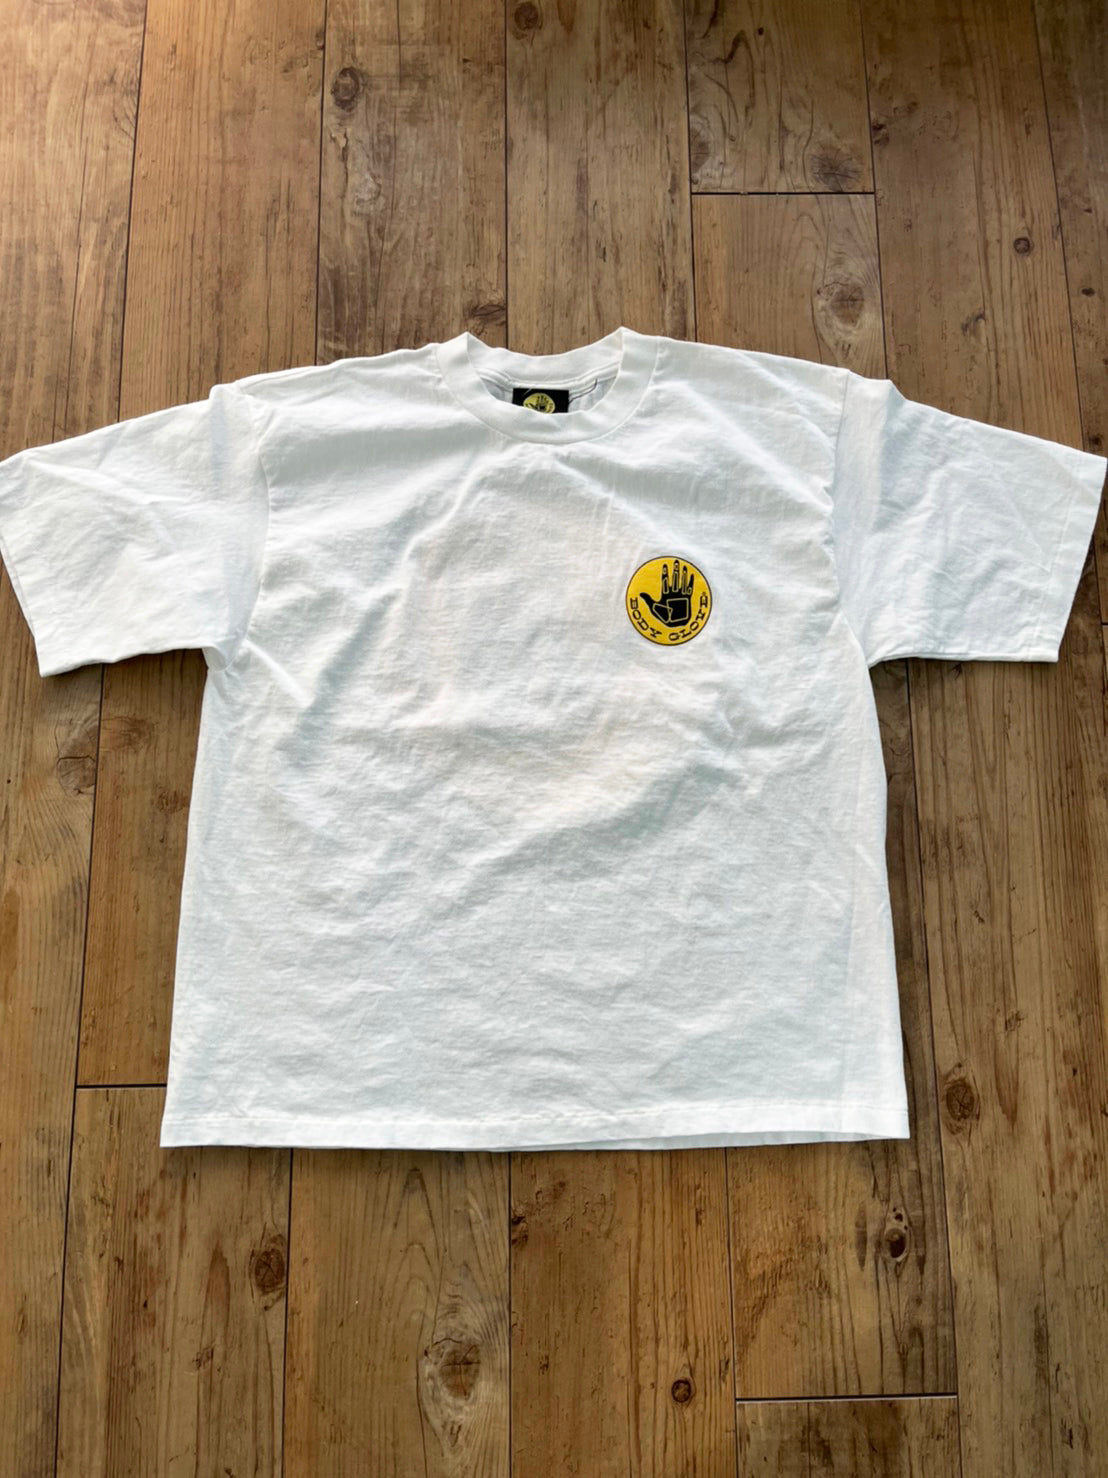 【BODY GLOVE】Dead Stock/one wash 80's vintage Big Logo T-shirt Made in USA(men's M) ※実際のサイズ感はmen's S相当